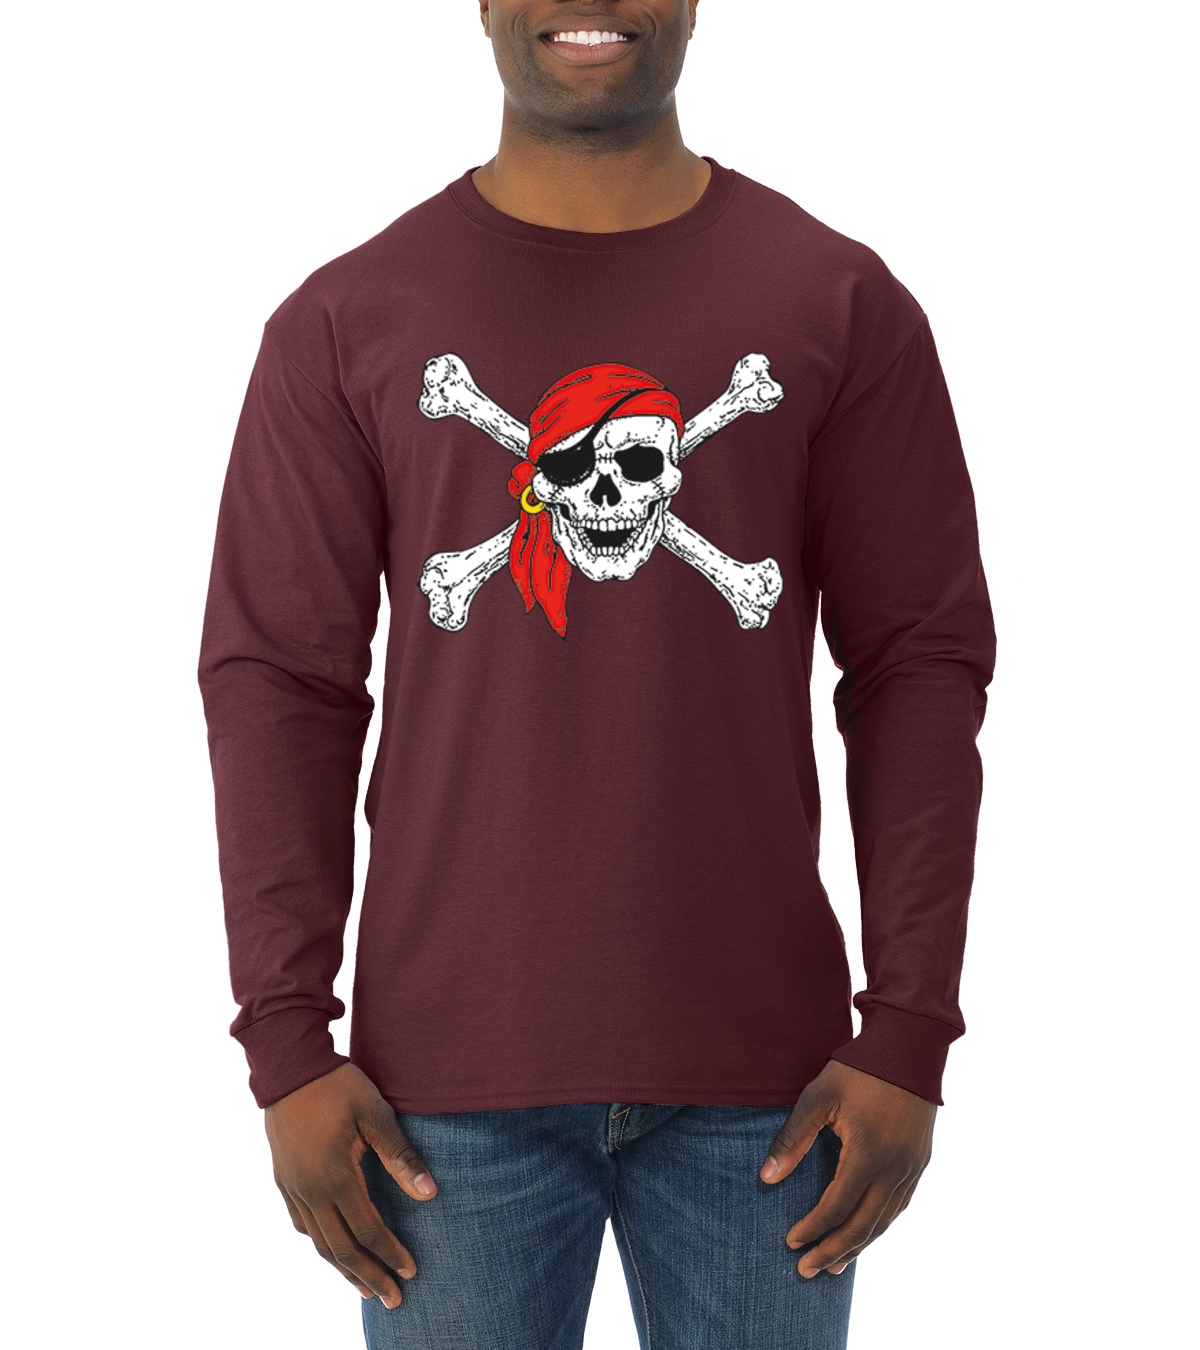 Skull and Crossbones Shirt Mens Graphic Tees Long Sleeve Tshirt Gifts for Men